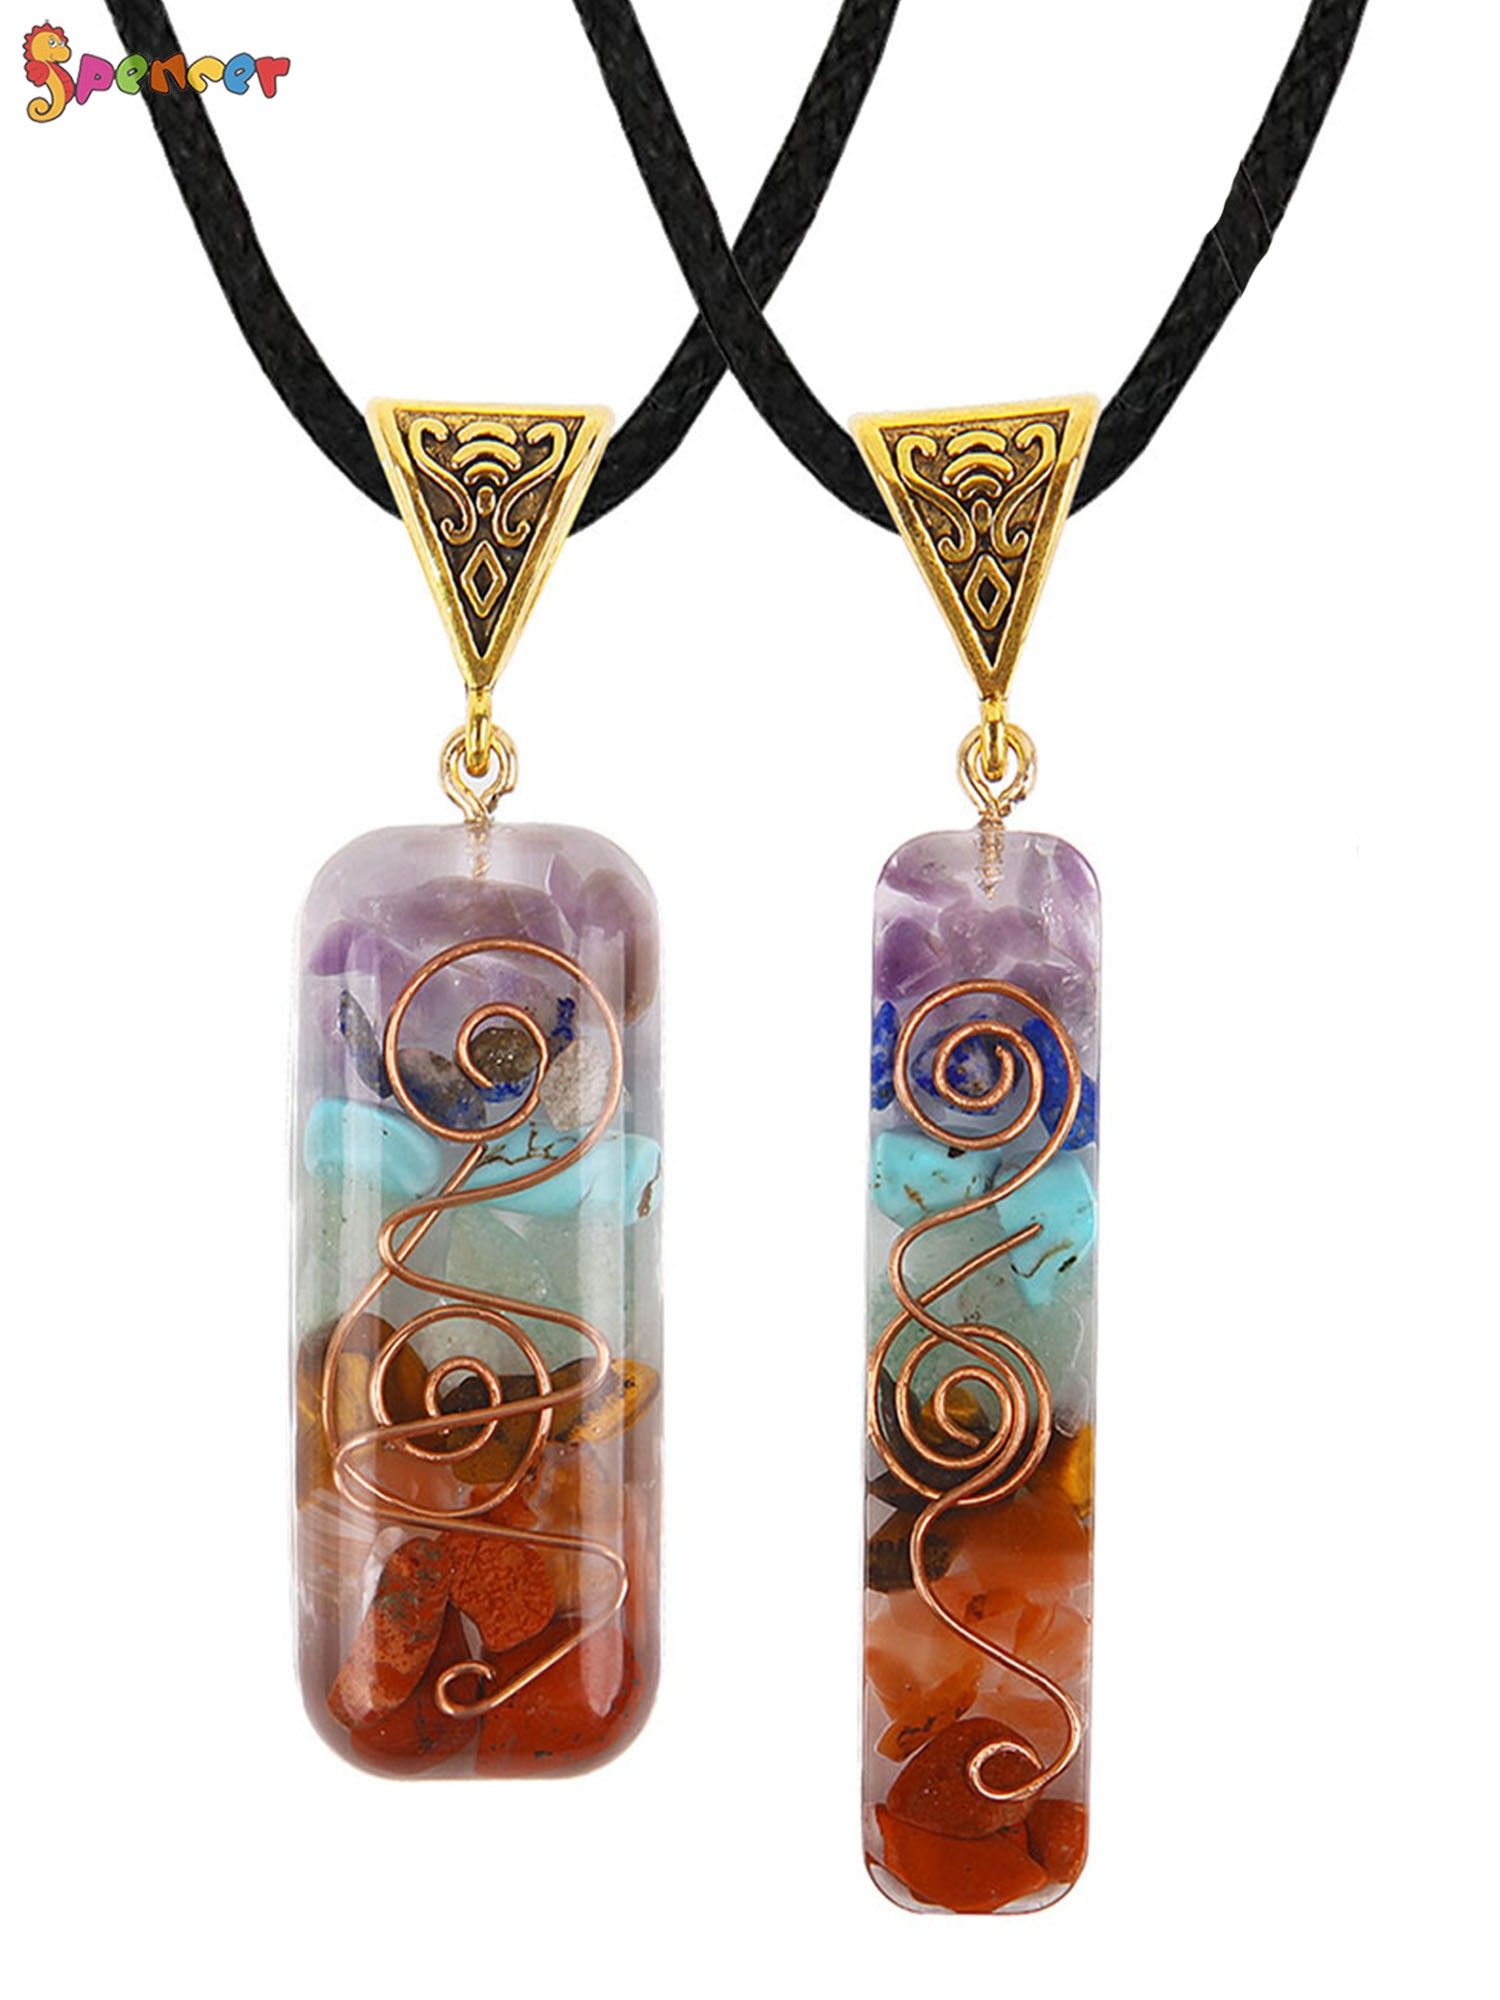 Custom pendant energetic jewelry crystal pendant spiritual